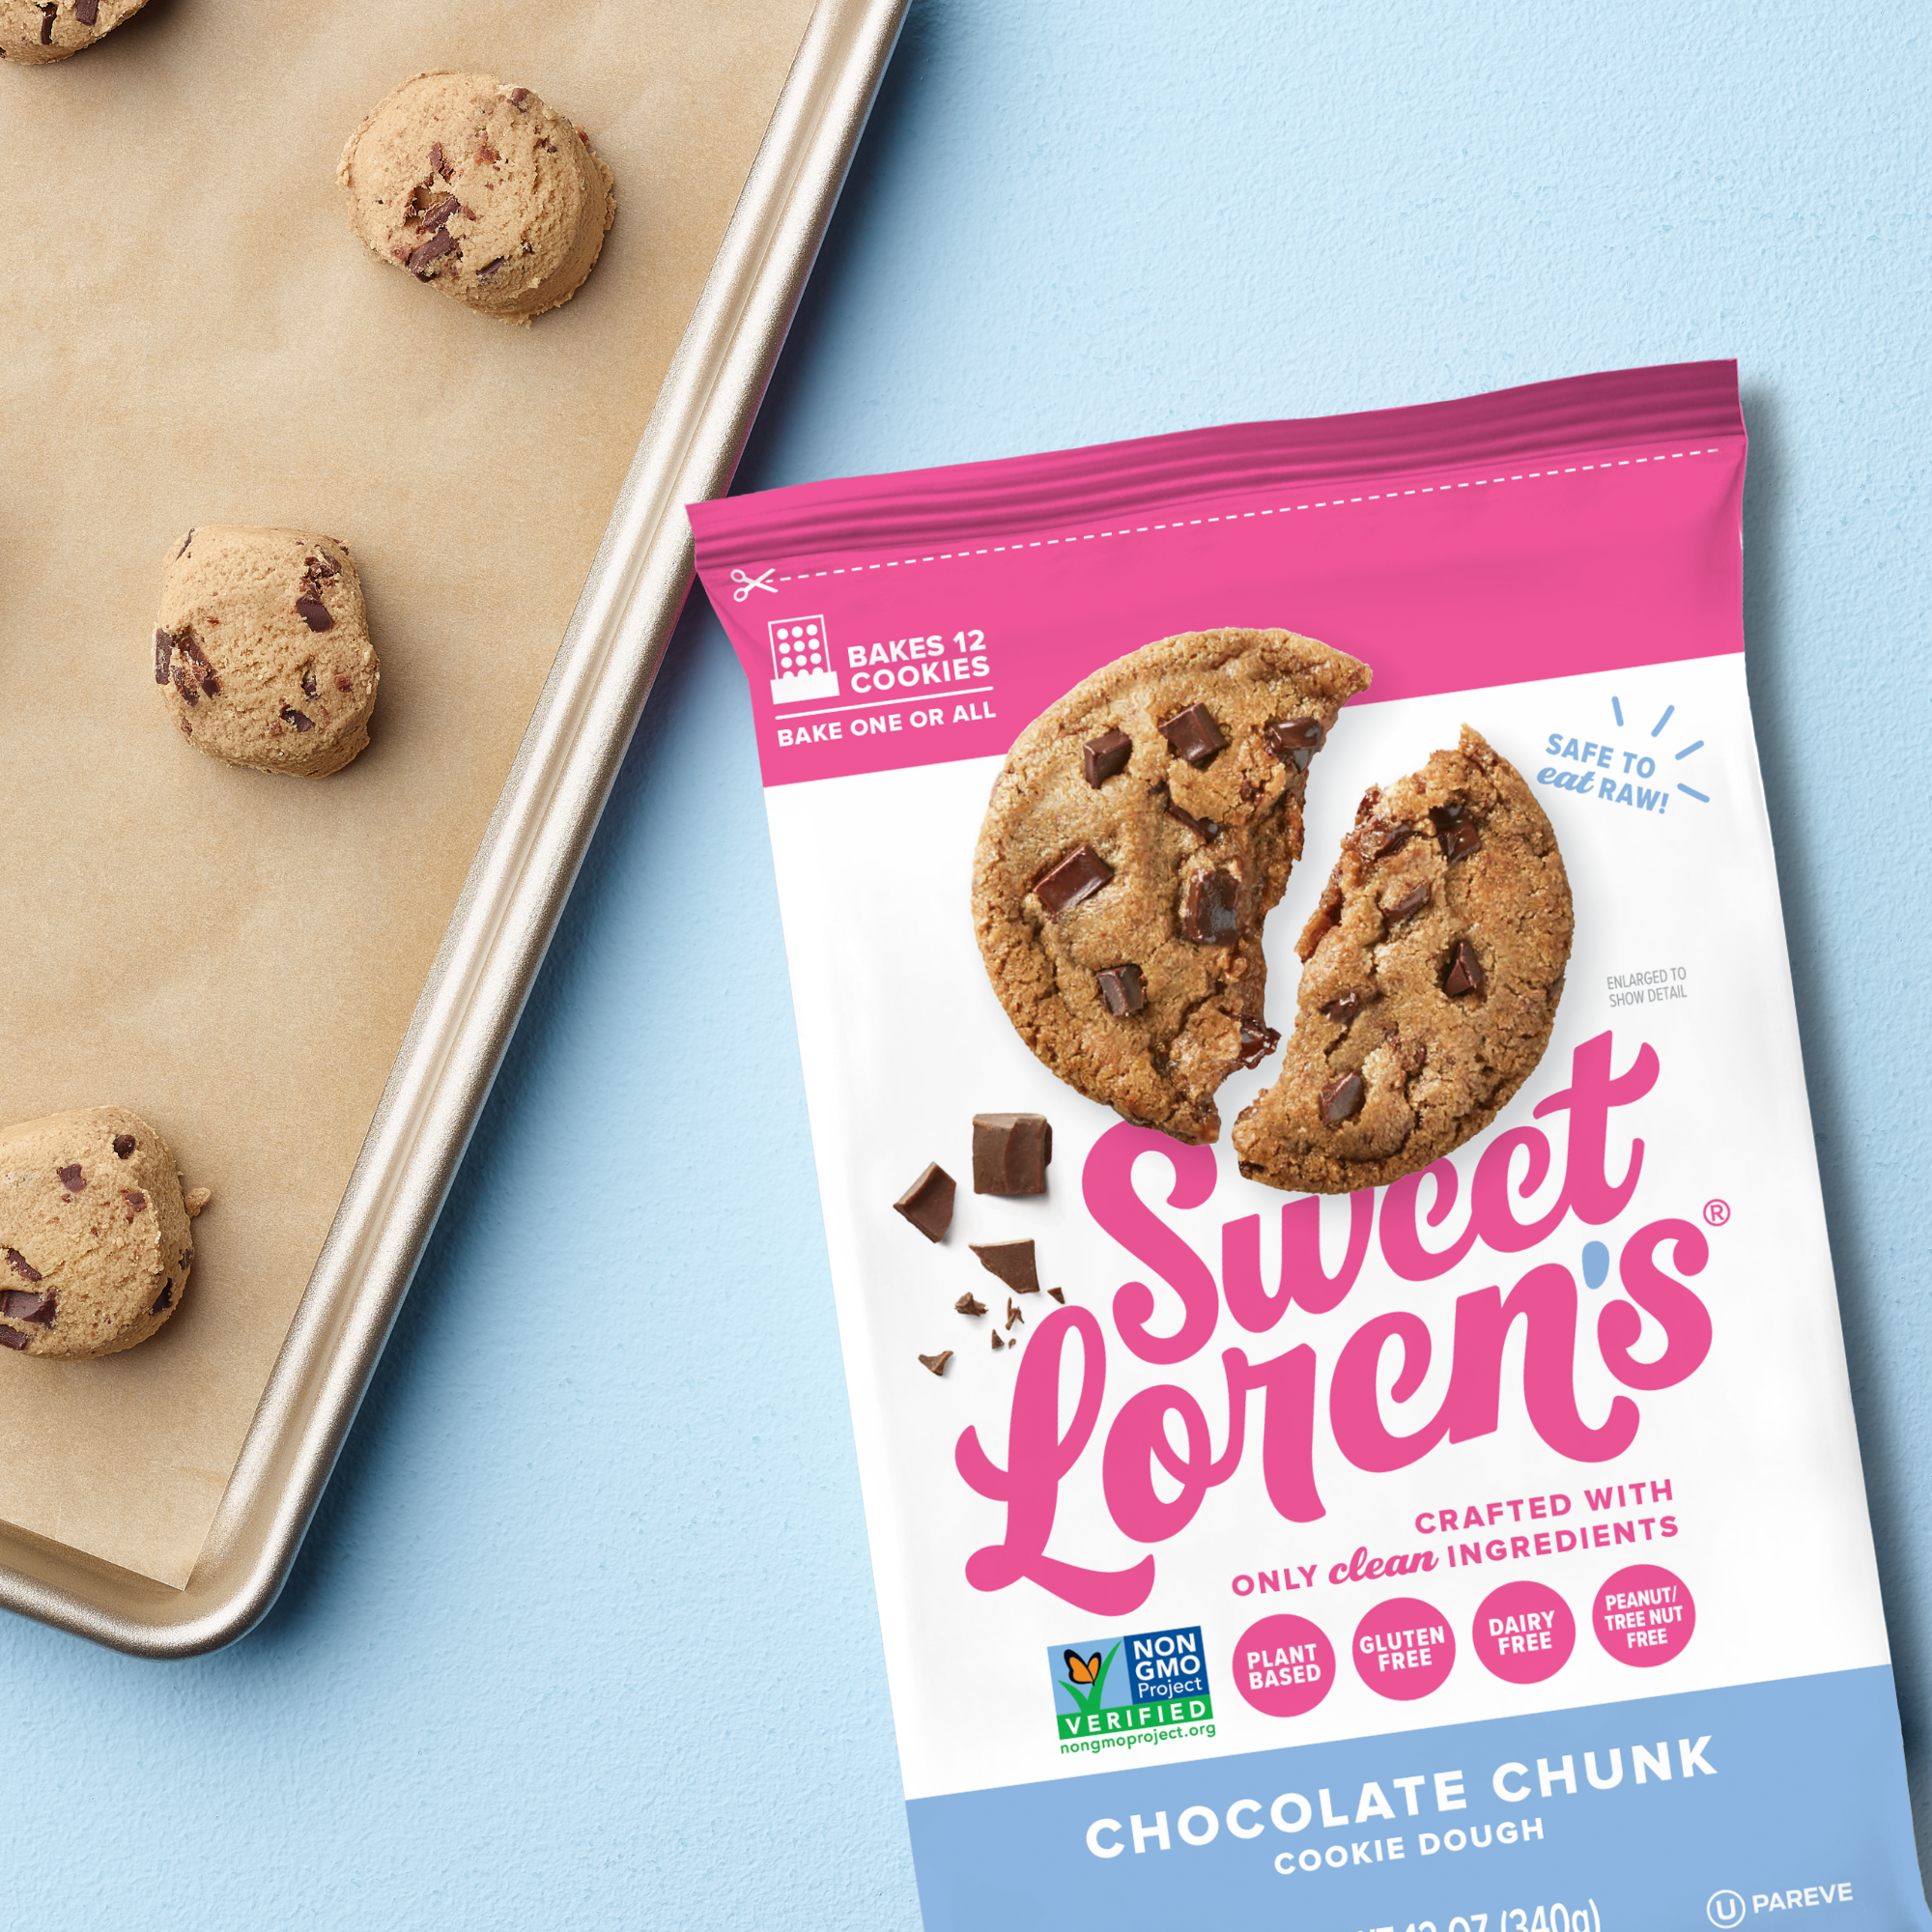 Chocolate Chunk Gluten Free Cookie Dough – Sweet Loren's